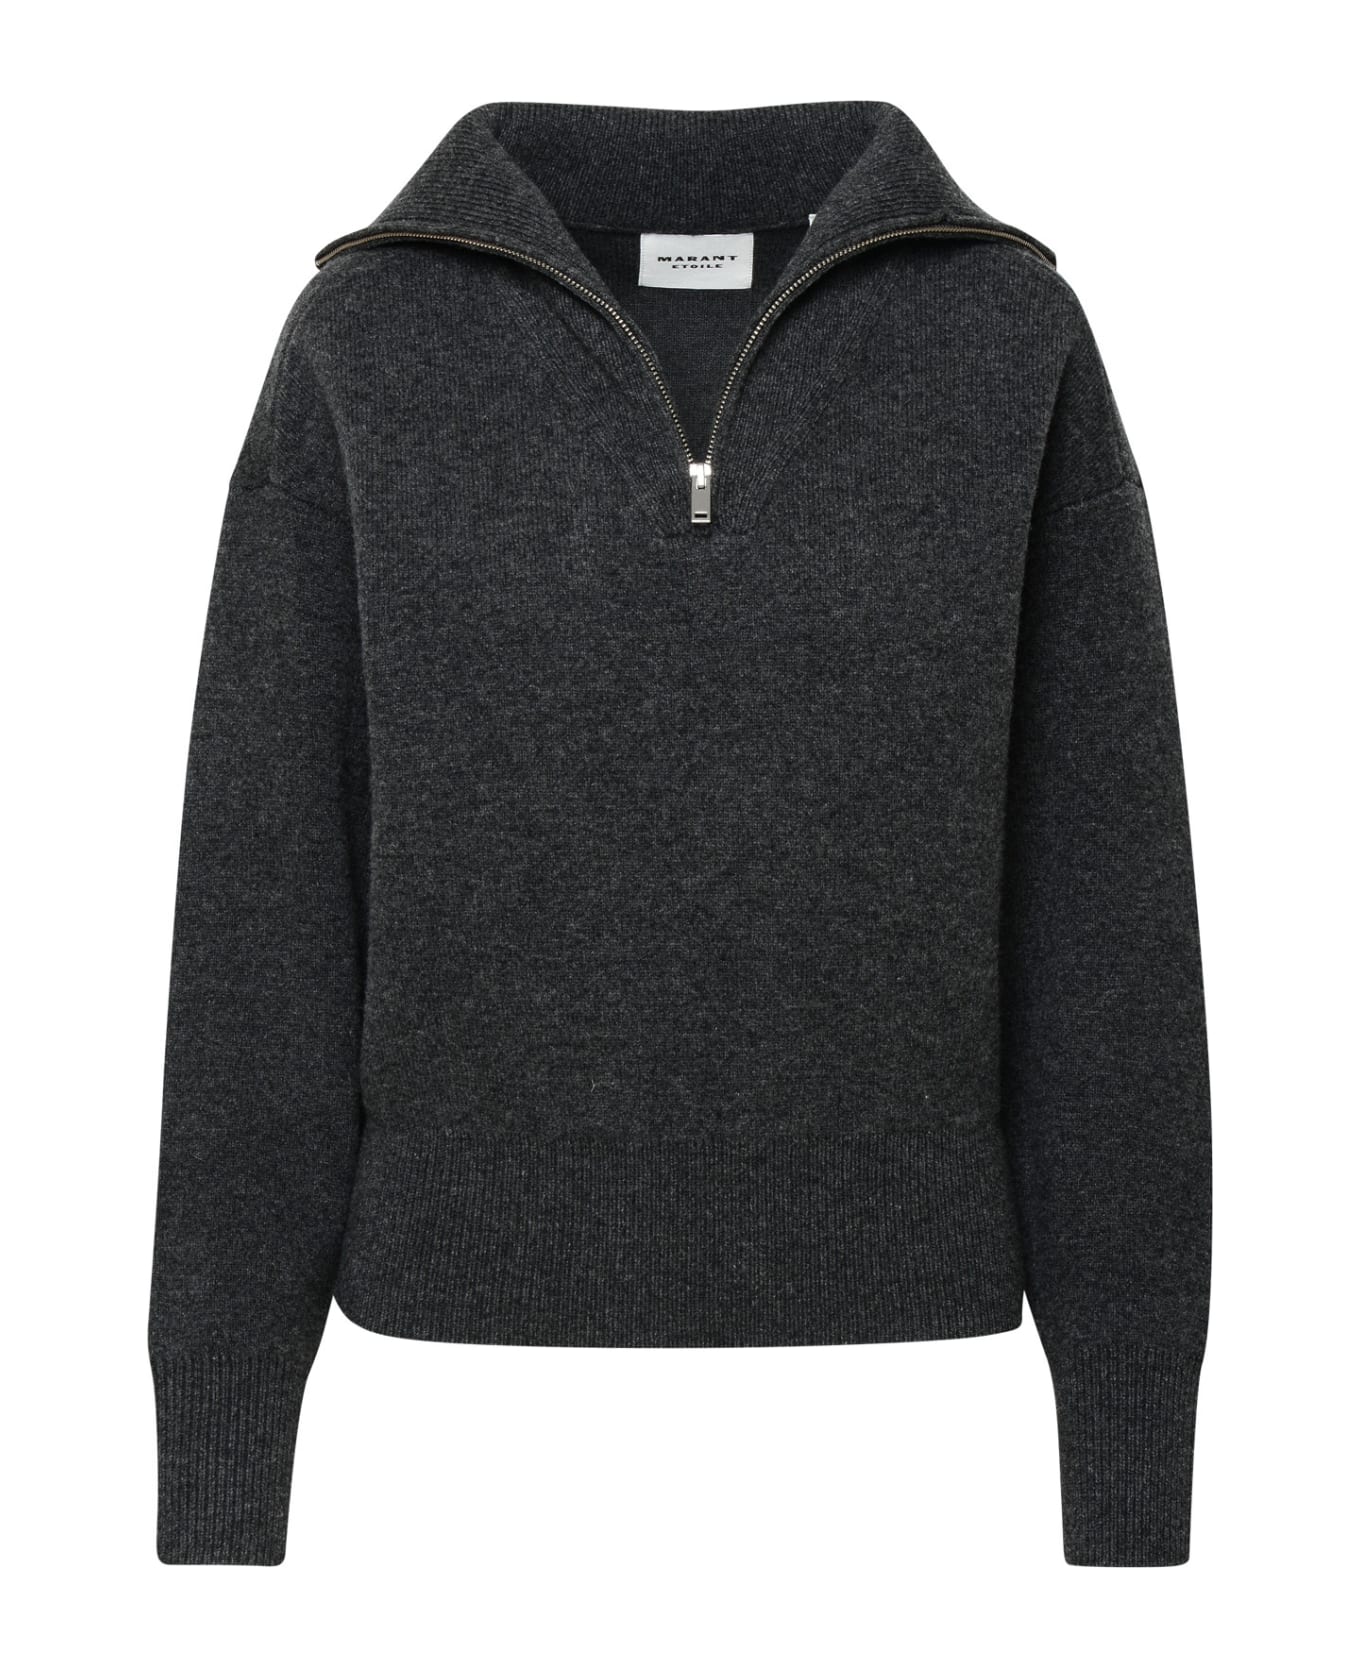 Marant Étoile Grey Wool Blend 'fancy' Sweater - Grey